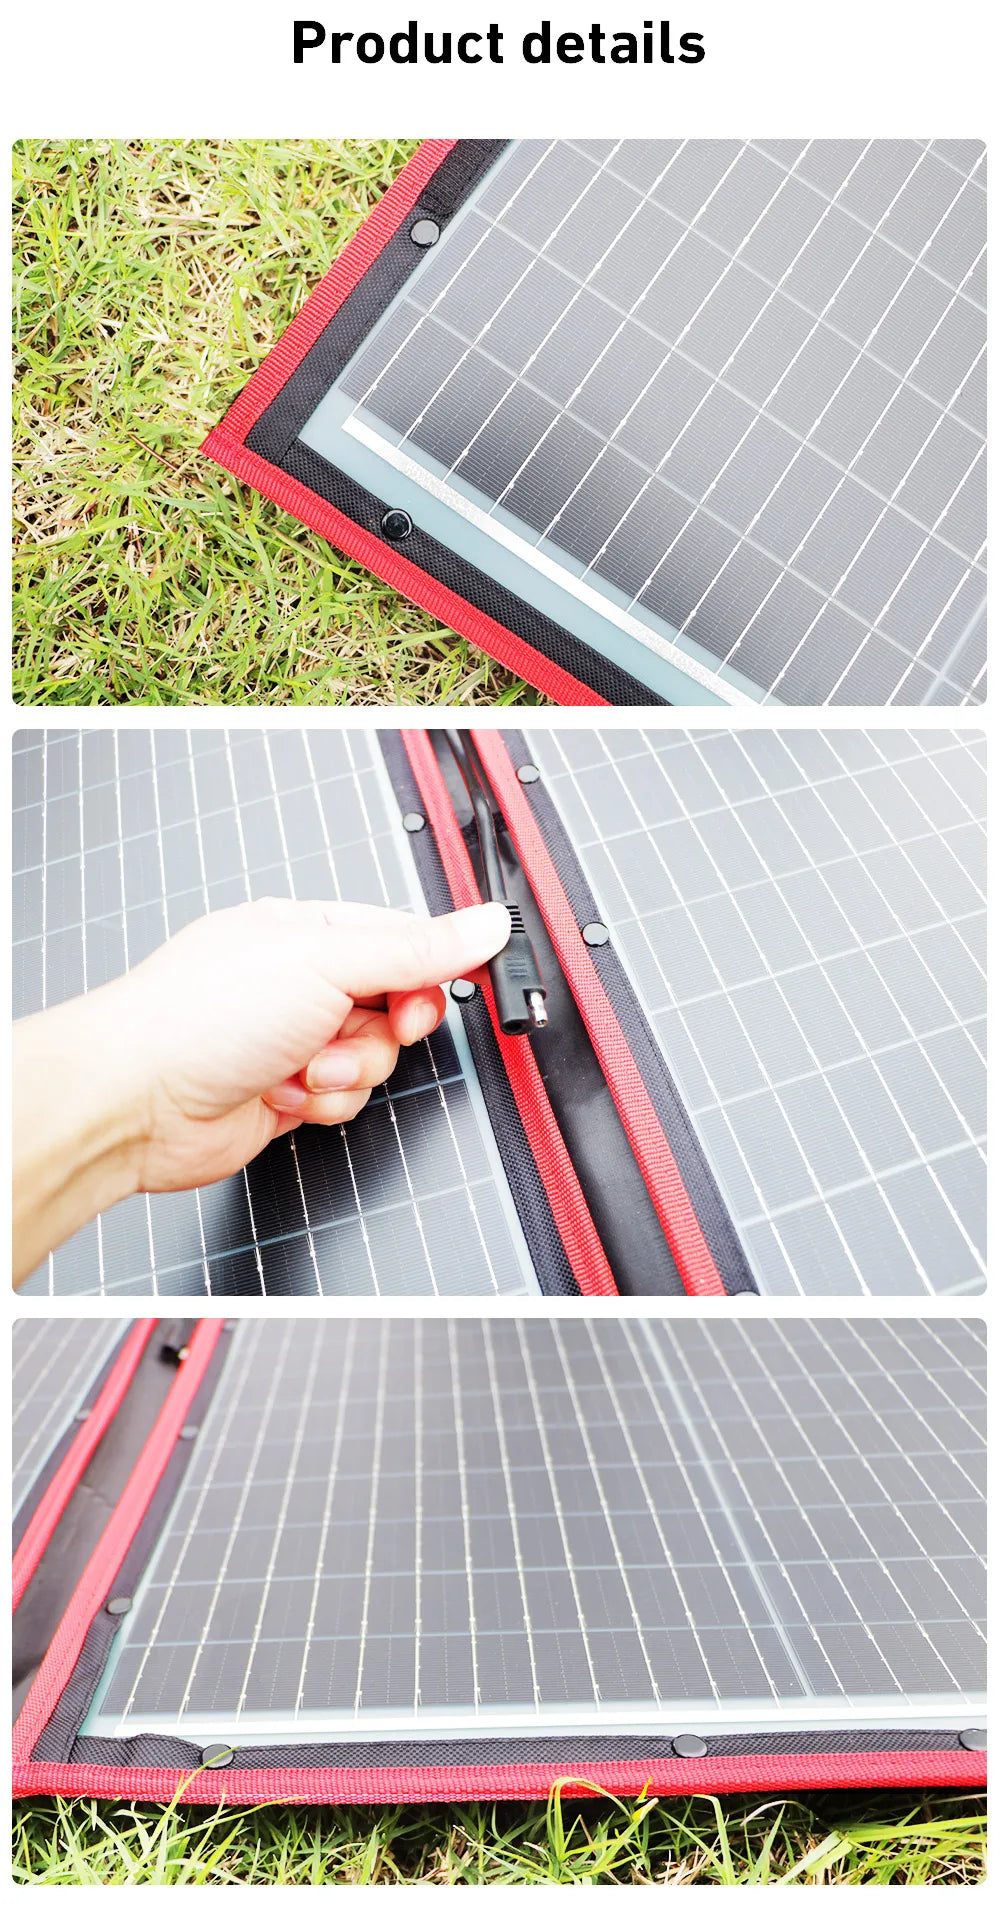 DOKIO 18V 100W 300W Portable Ffolding Solar Panel, DOKIO Home Appliance Specification